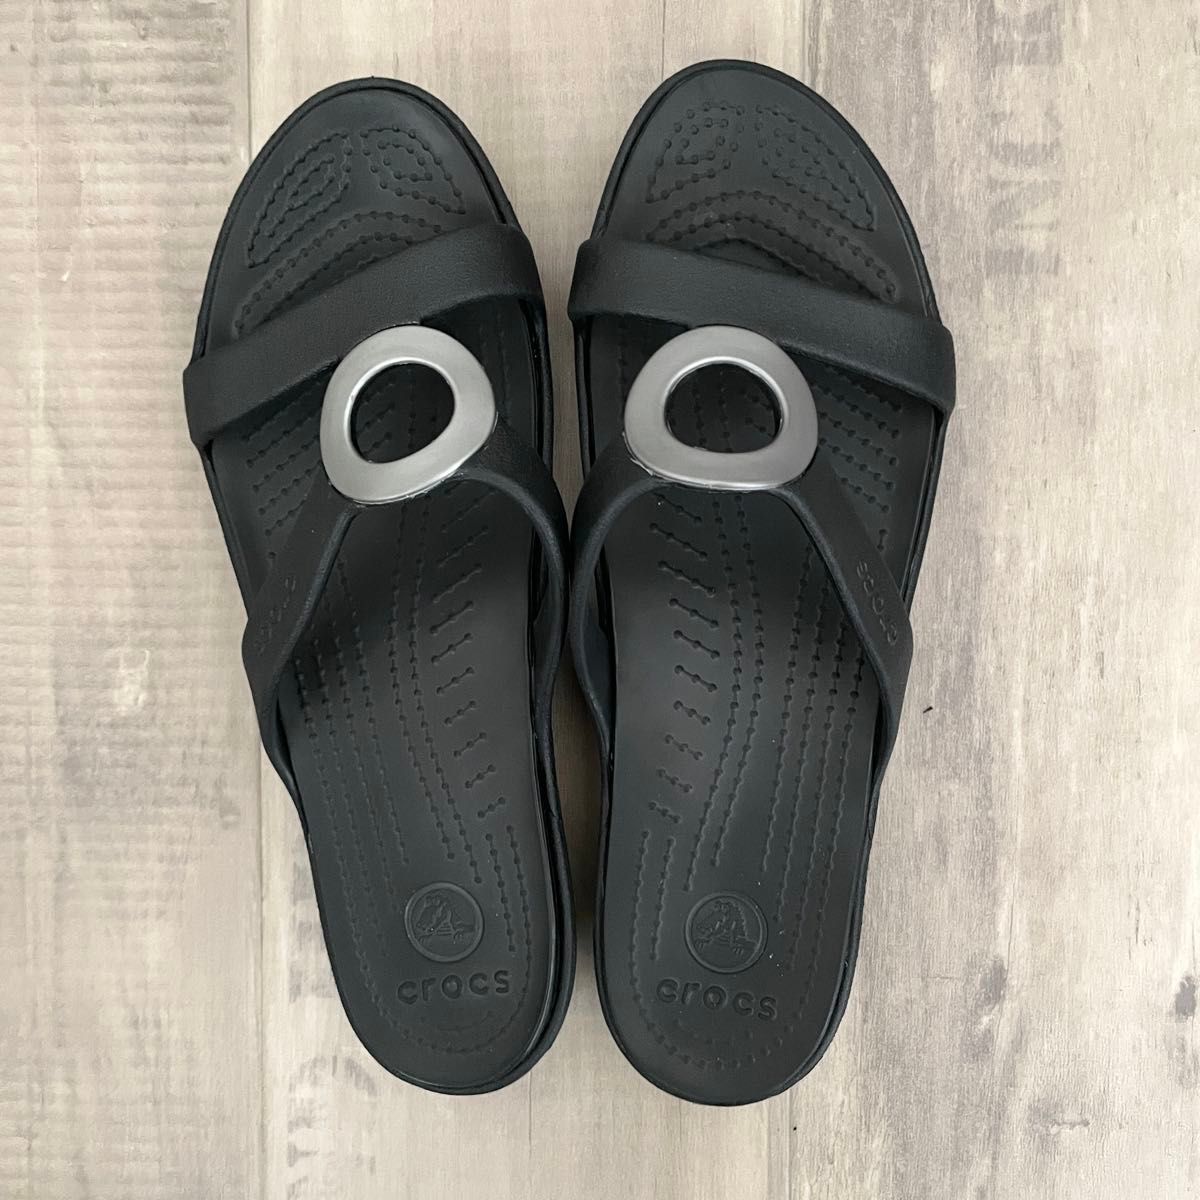 【crocs】 クロックス サンダル ミュール レディース 黒 ブラック 匿名配送 夏靴 25.0